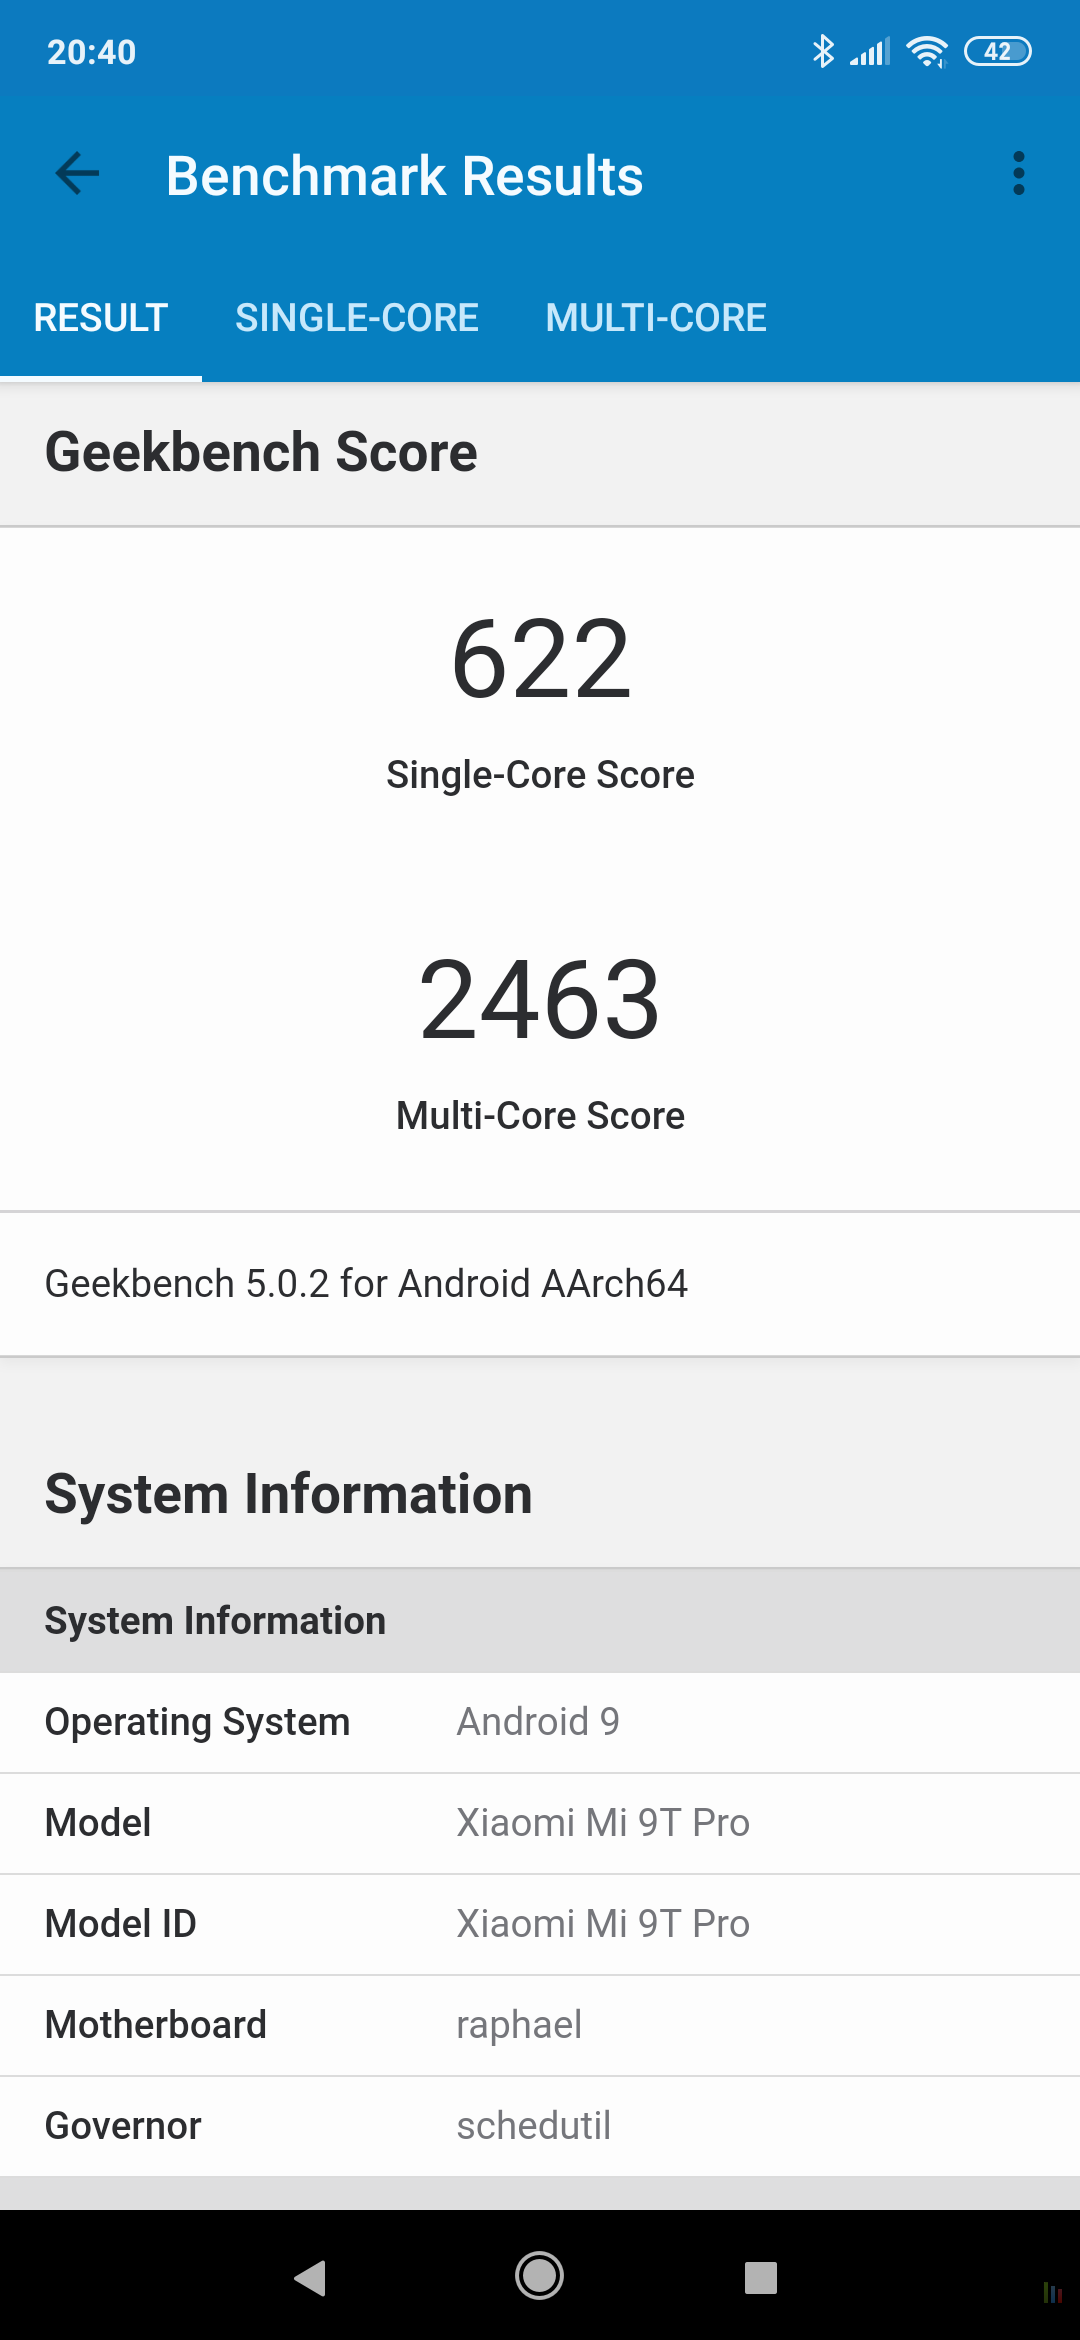 Xiaomi Mi 9T Pro Geekbench